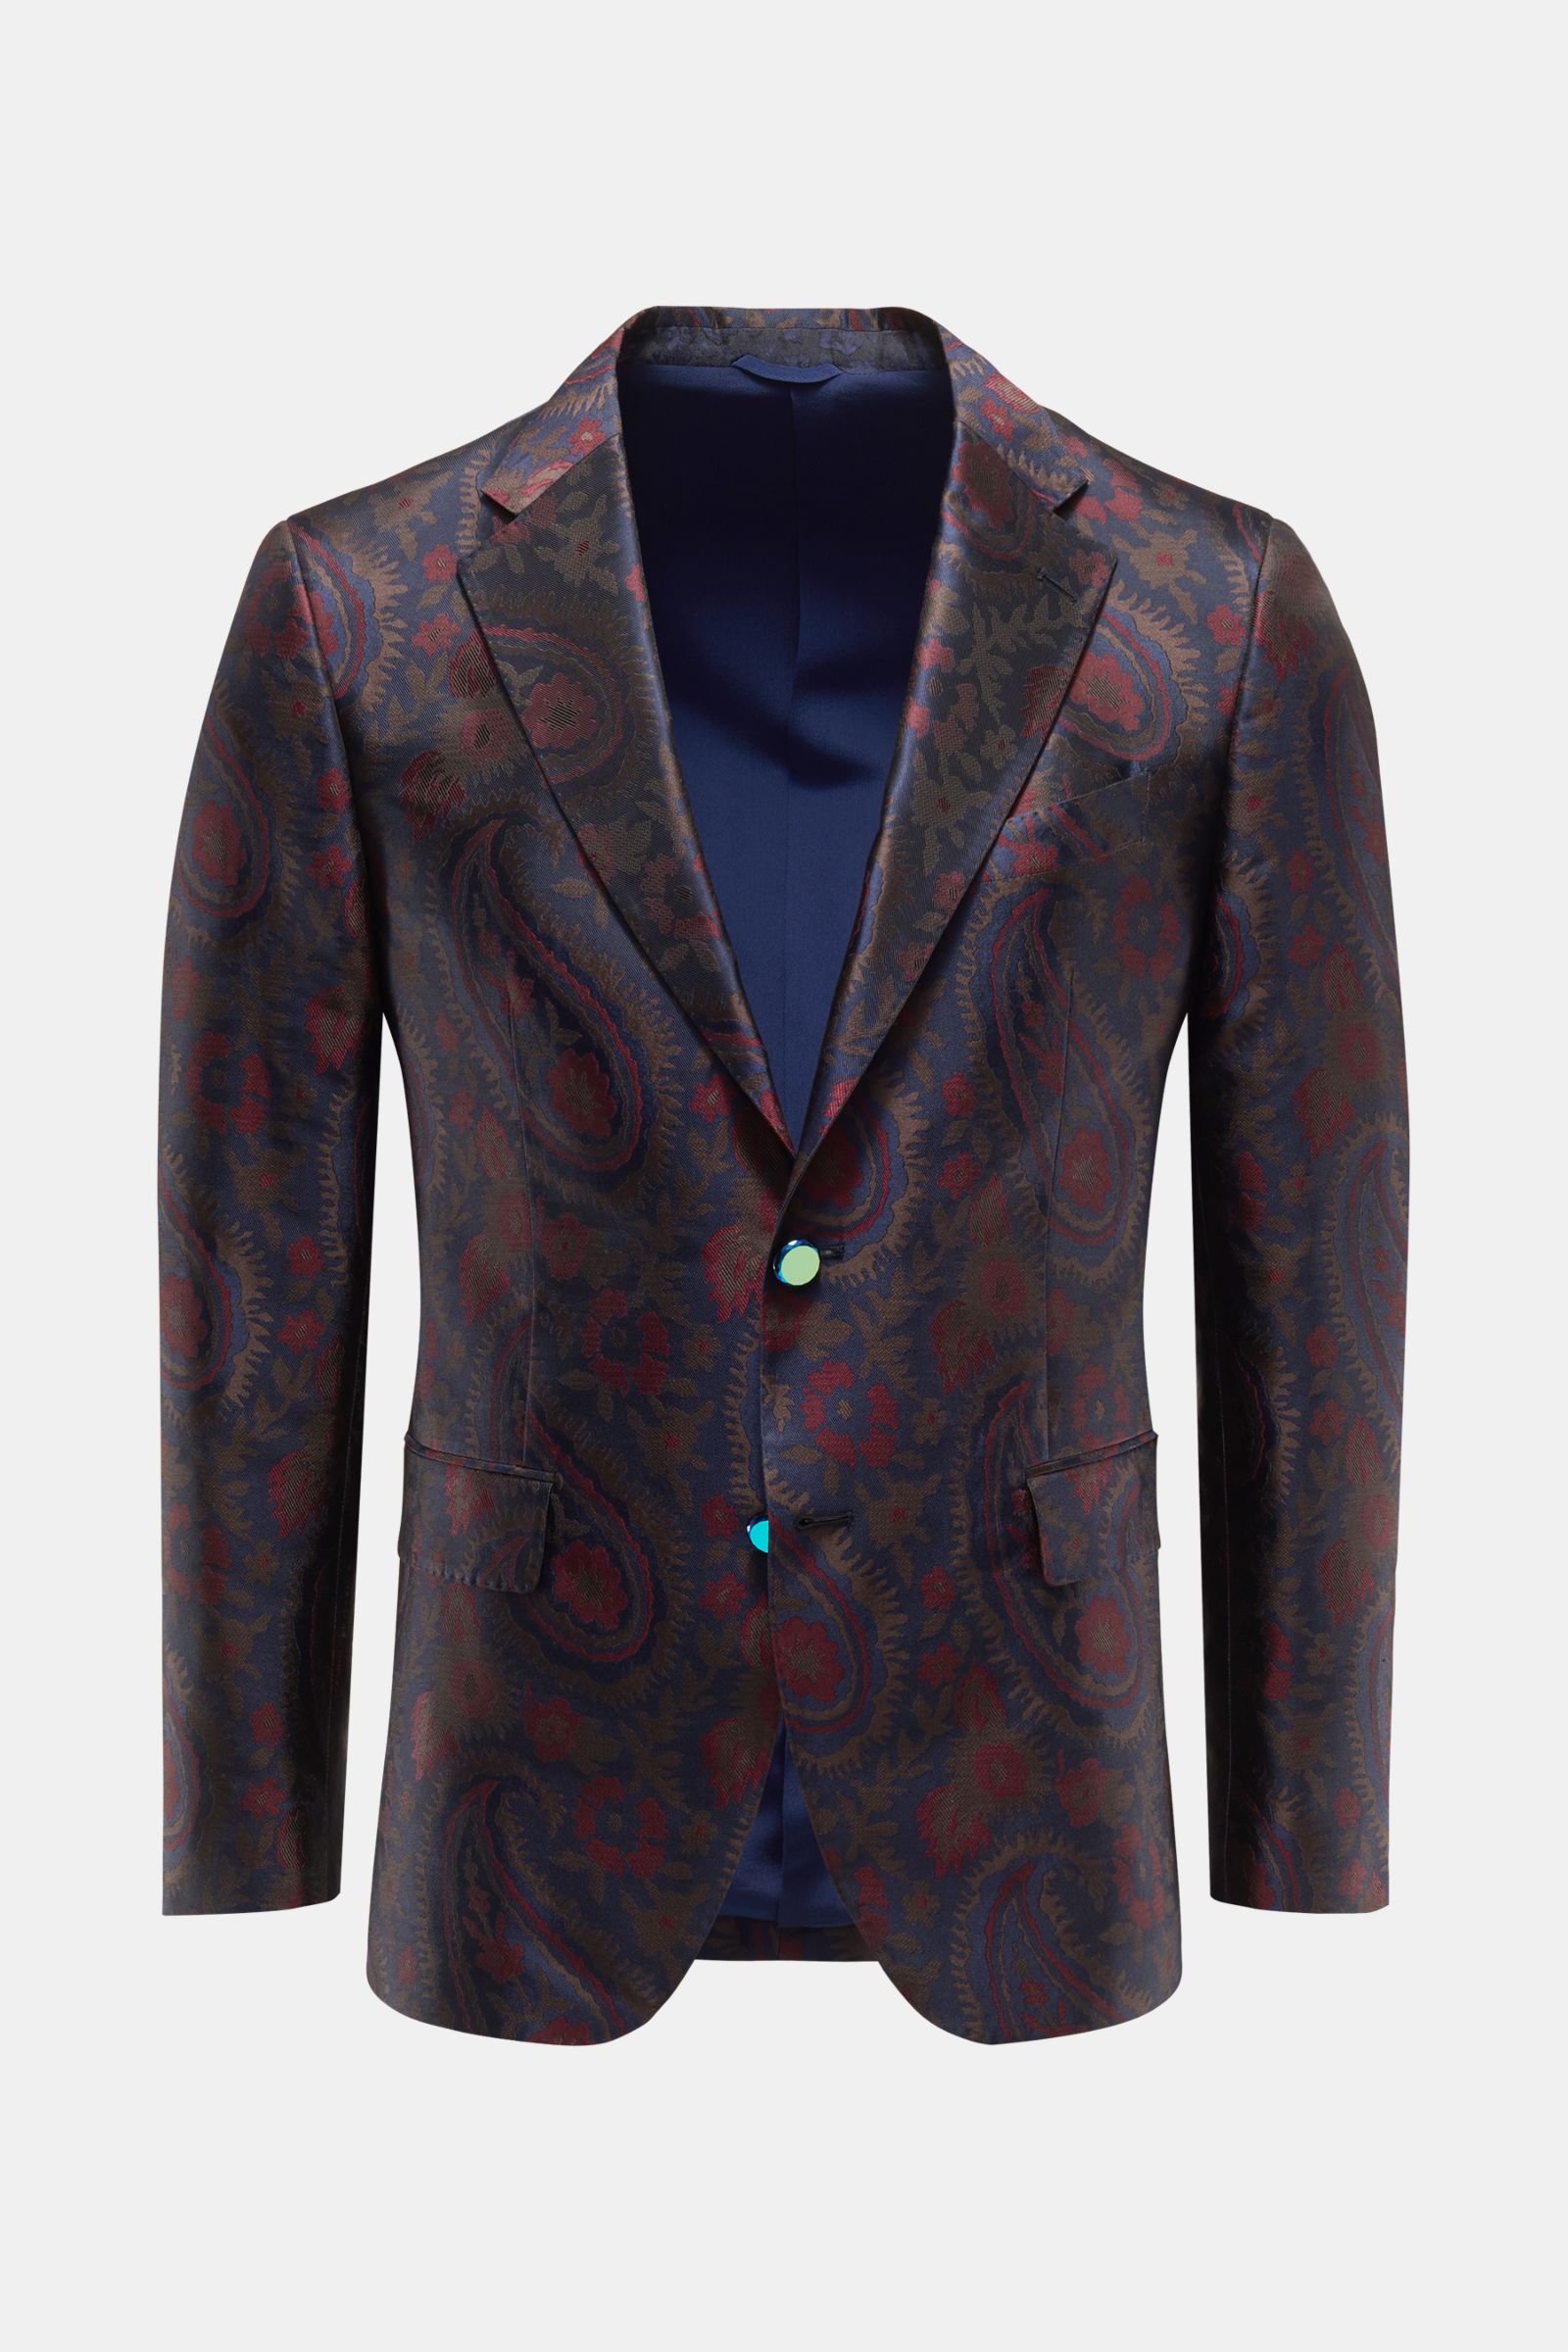 Smart-casual jacket navy/burgundy patterned